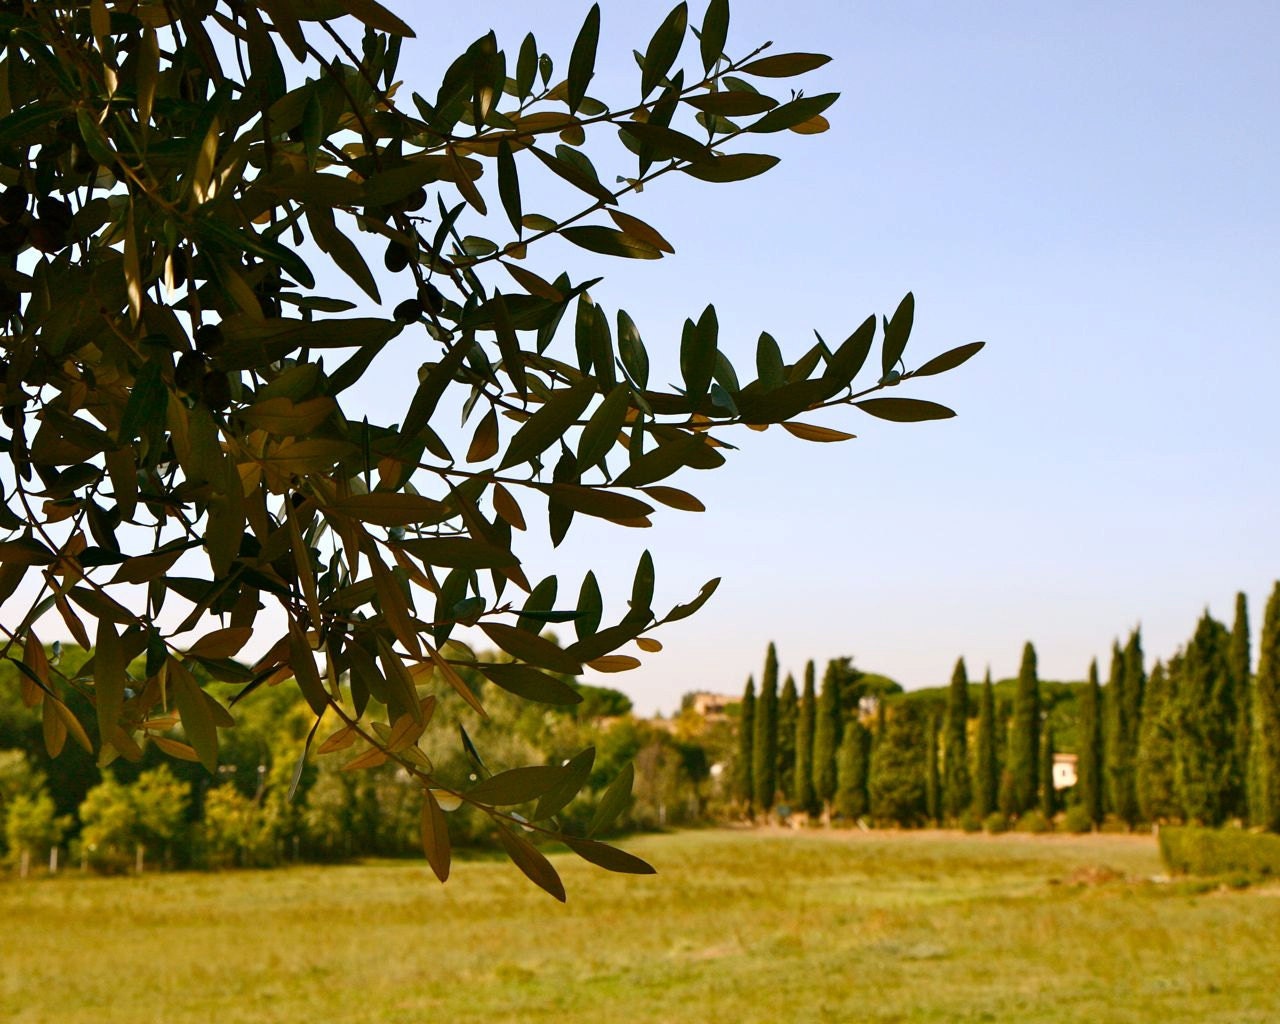 Olive Tree Photograph Rome Italy Landscape by VitaNostra on Etsy